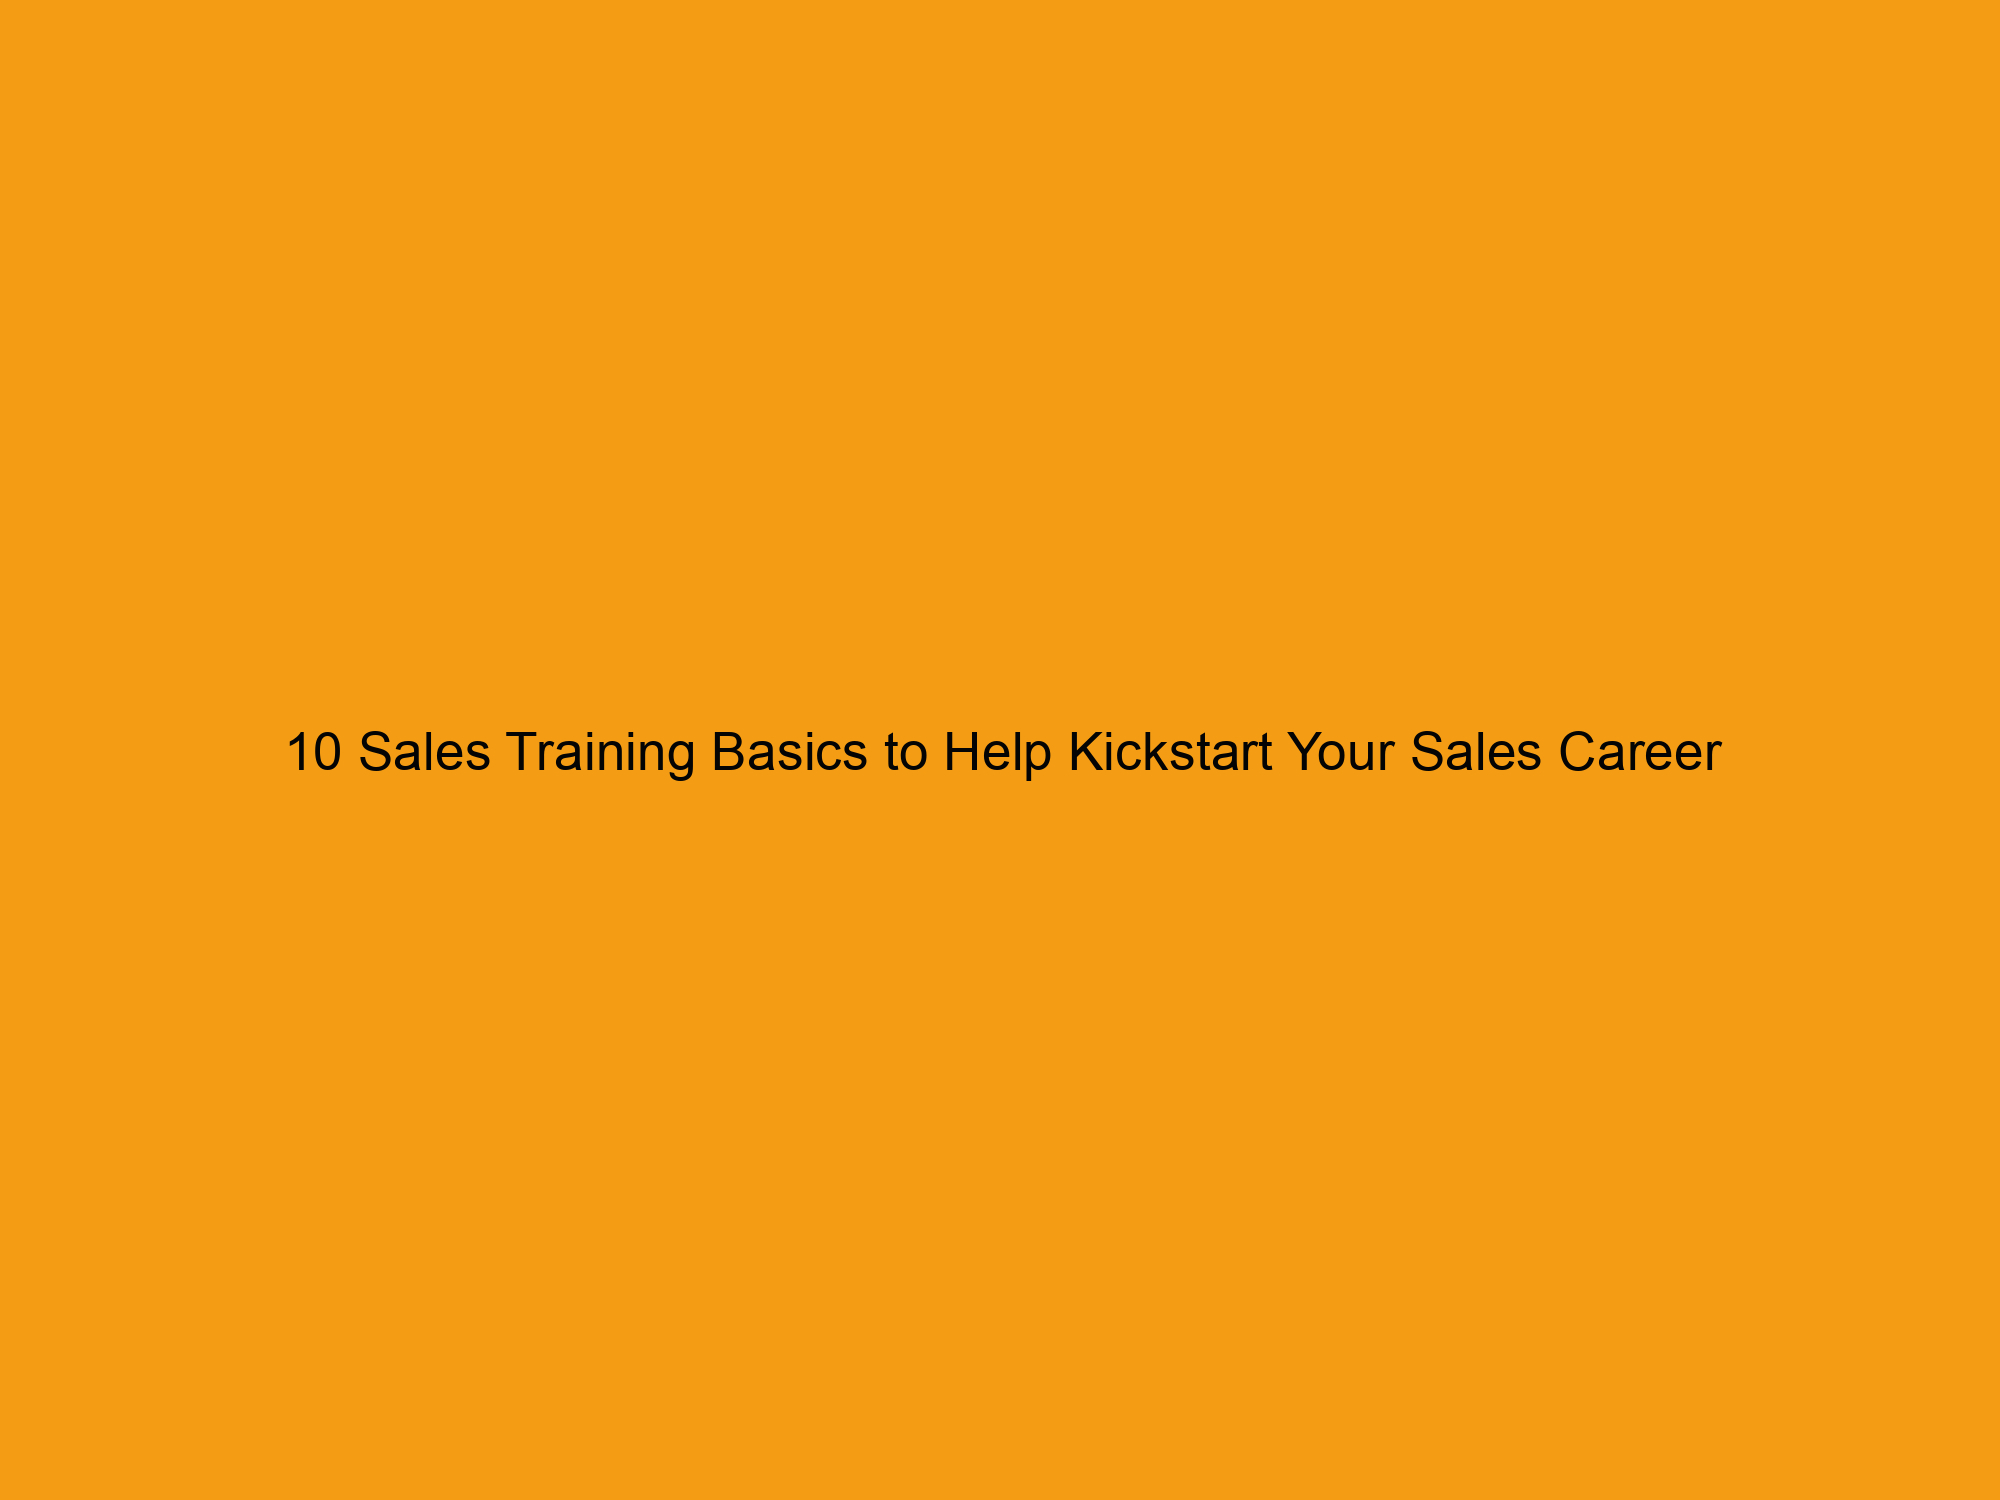 10 Sales Training Basics to Help Kickstart Your Sales Career